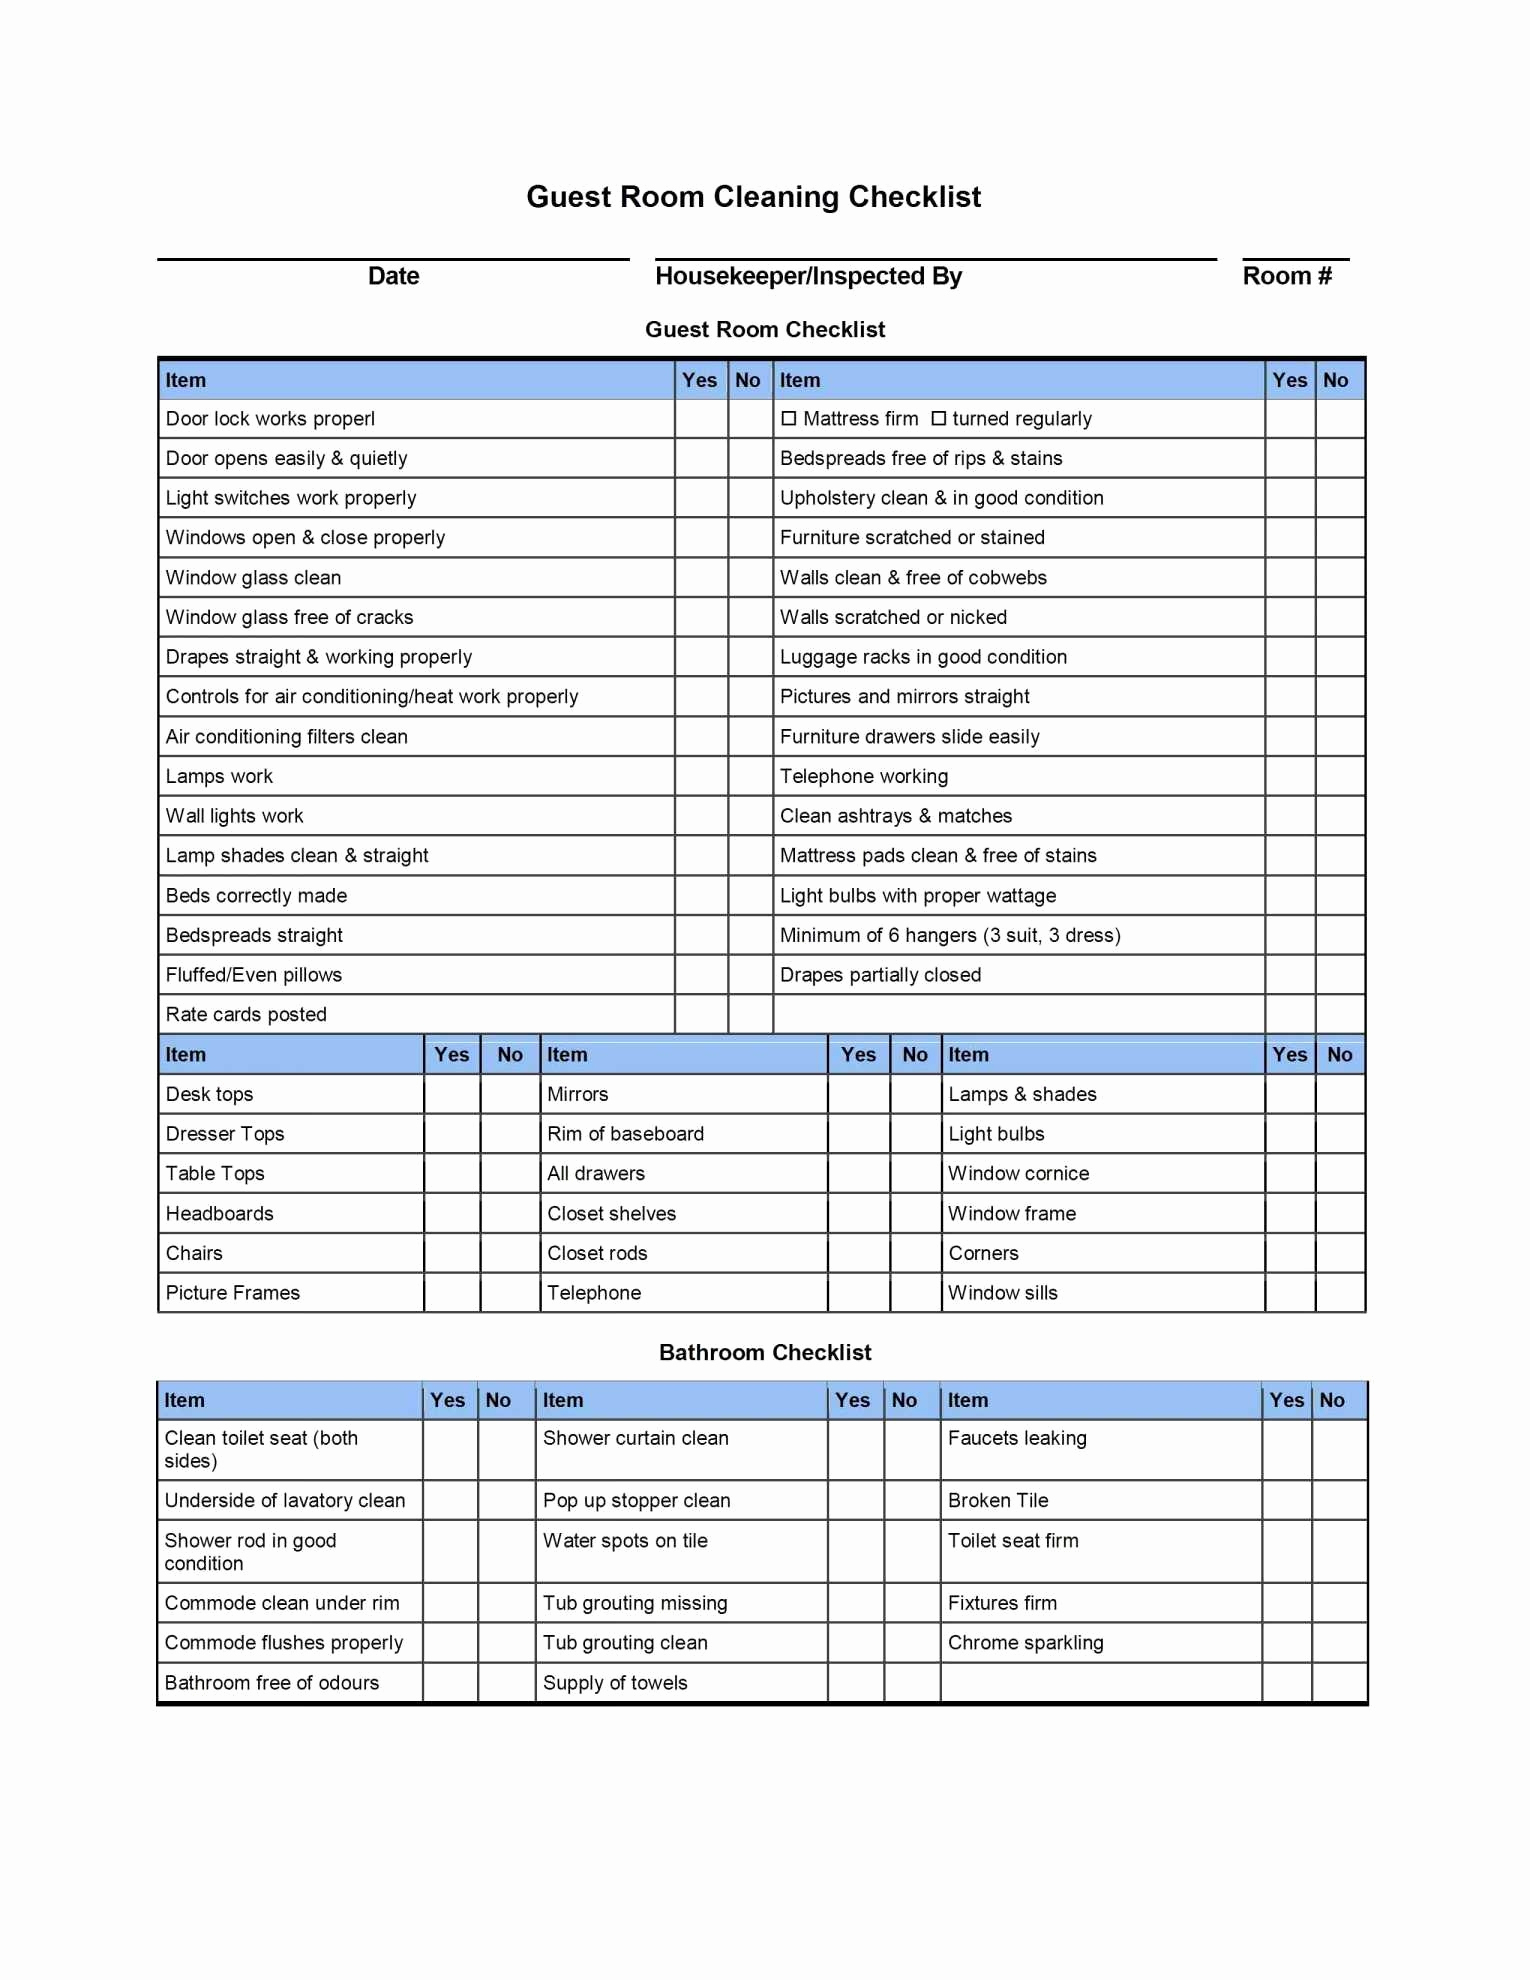 Liquor Inventory Spreadsheets New Inventory List Spreadsheet Bar Throughout Bar Liquor Inventory List